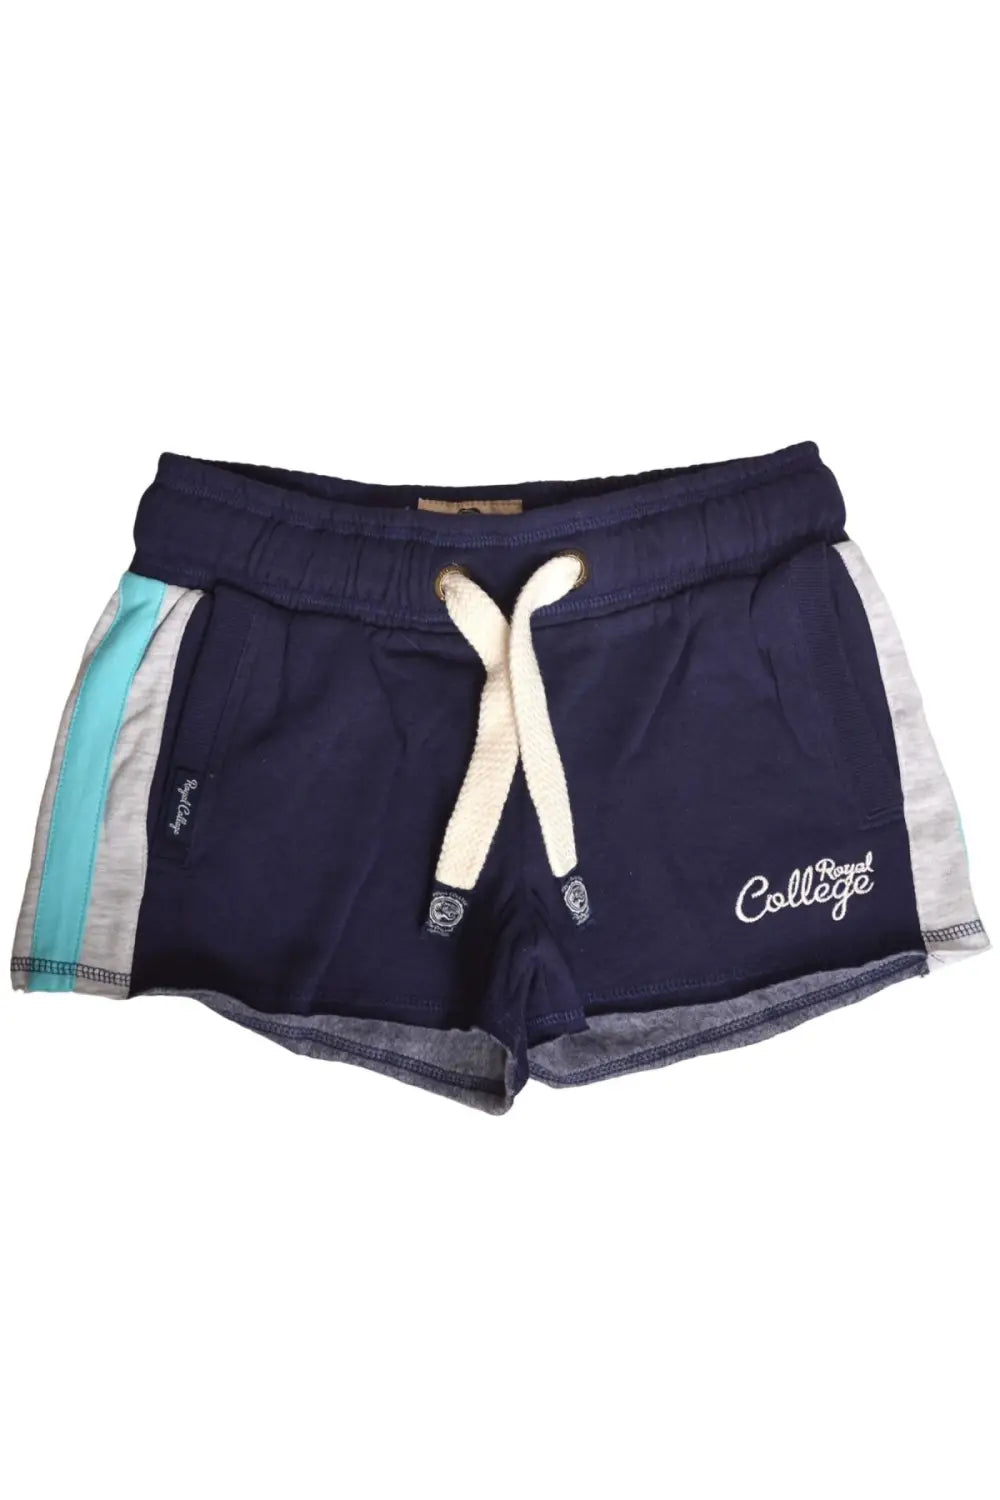 Tokyo Laundry Mini Sweat Shorts